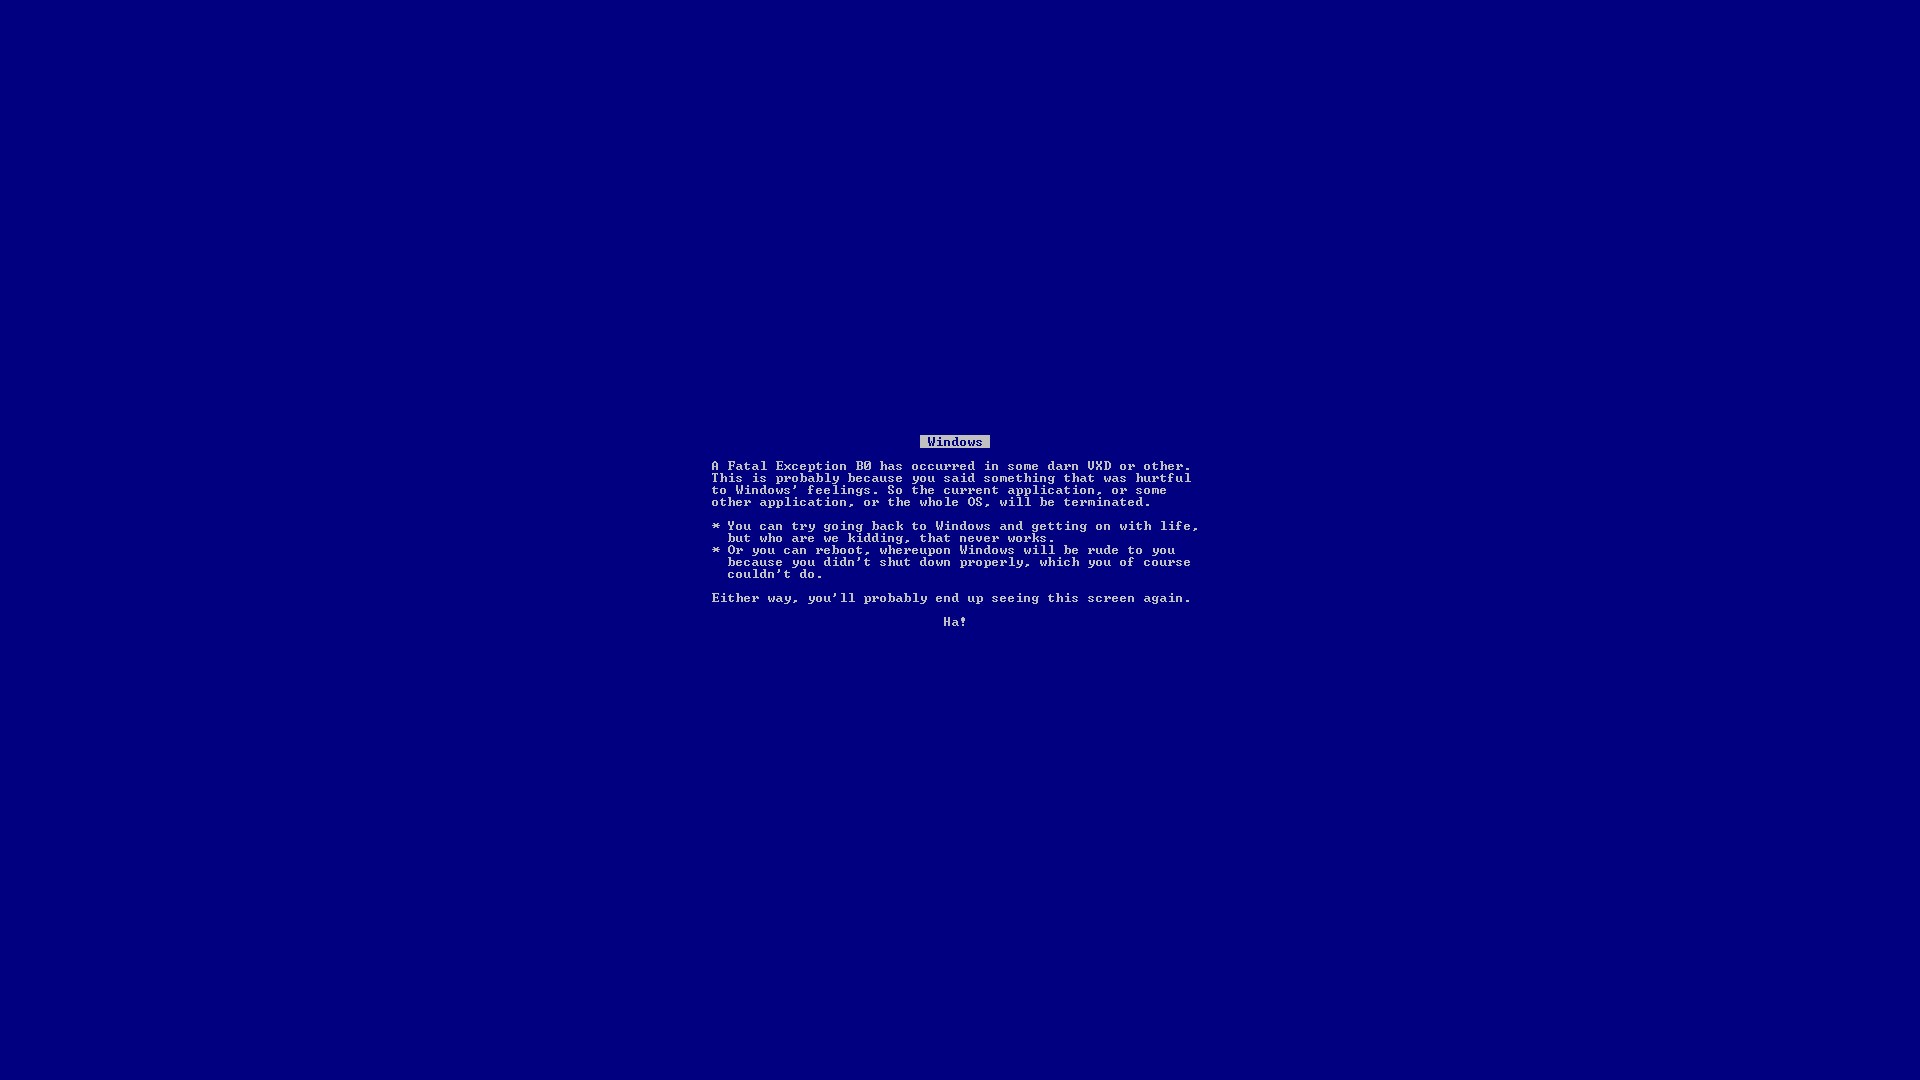 Windows 95 Image Download